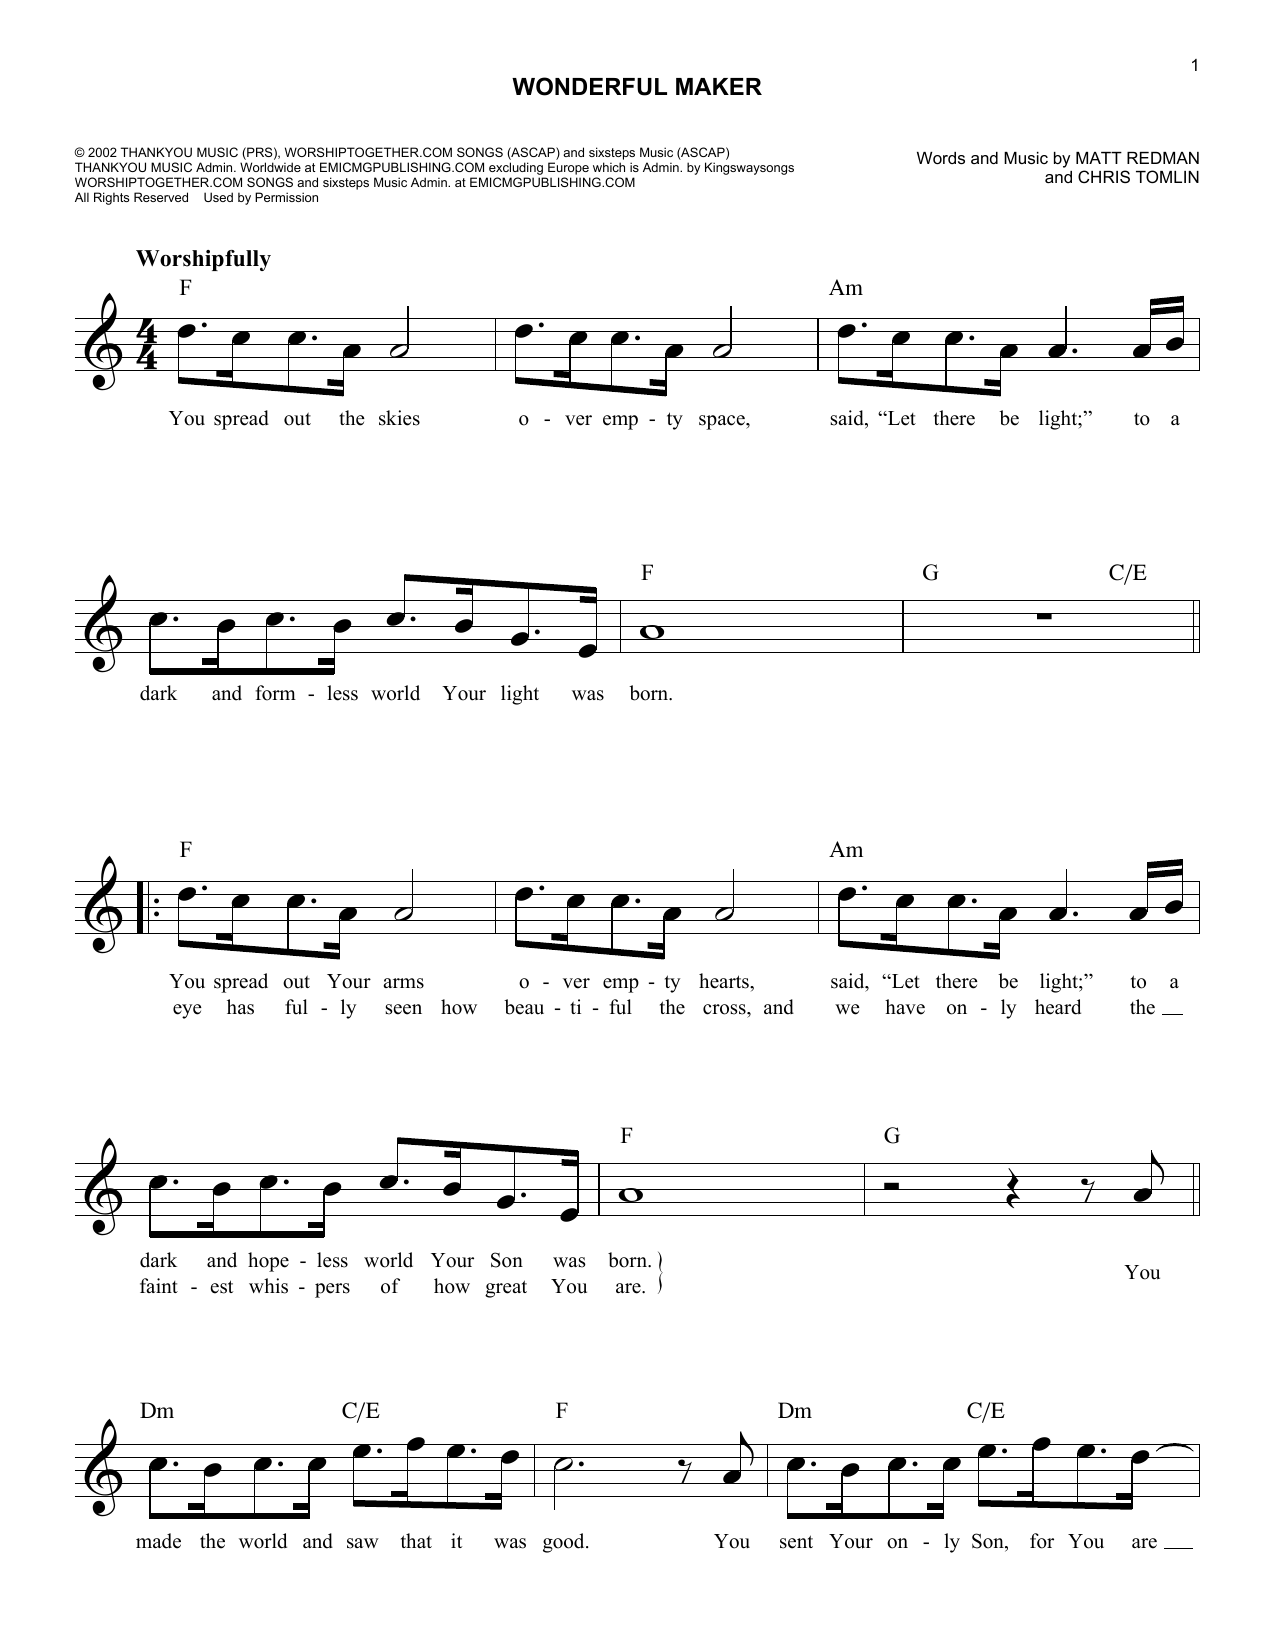 Matt Redman Wonderful Maker sheet music notes and chords. Download Printable PDF.